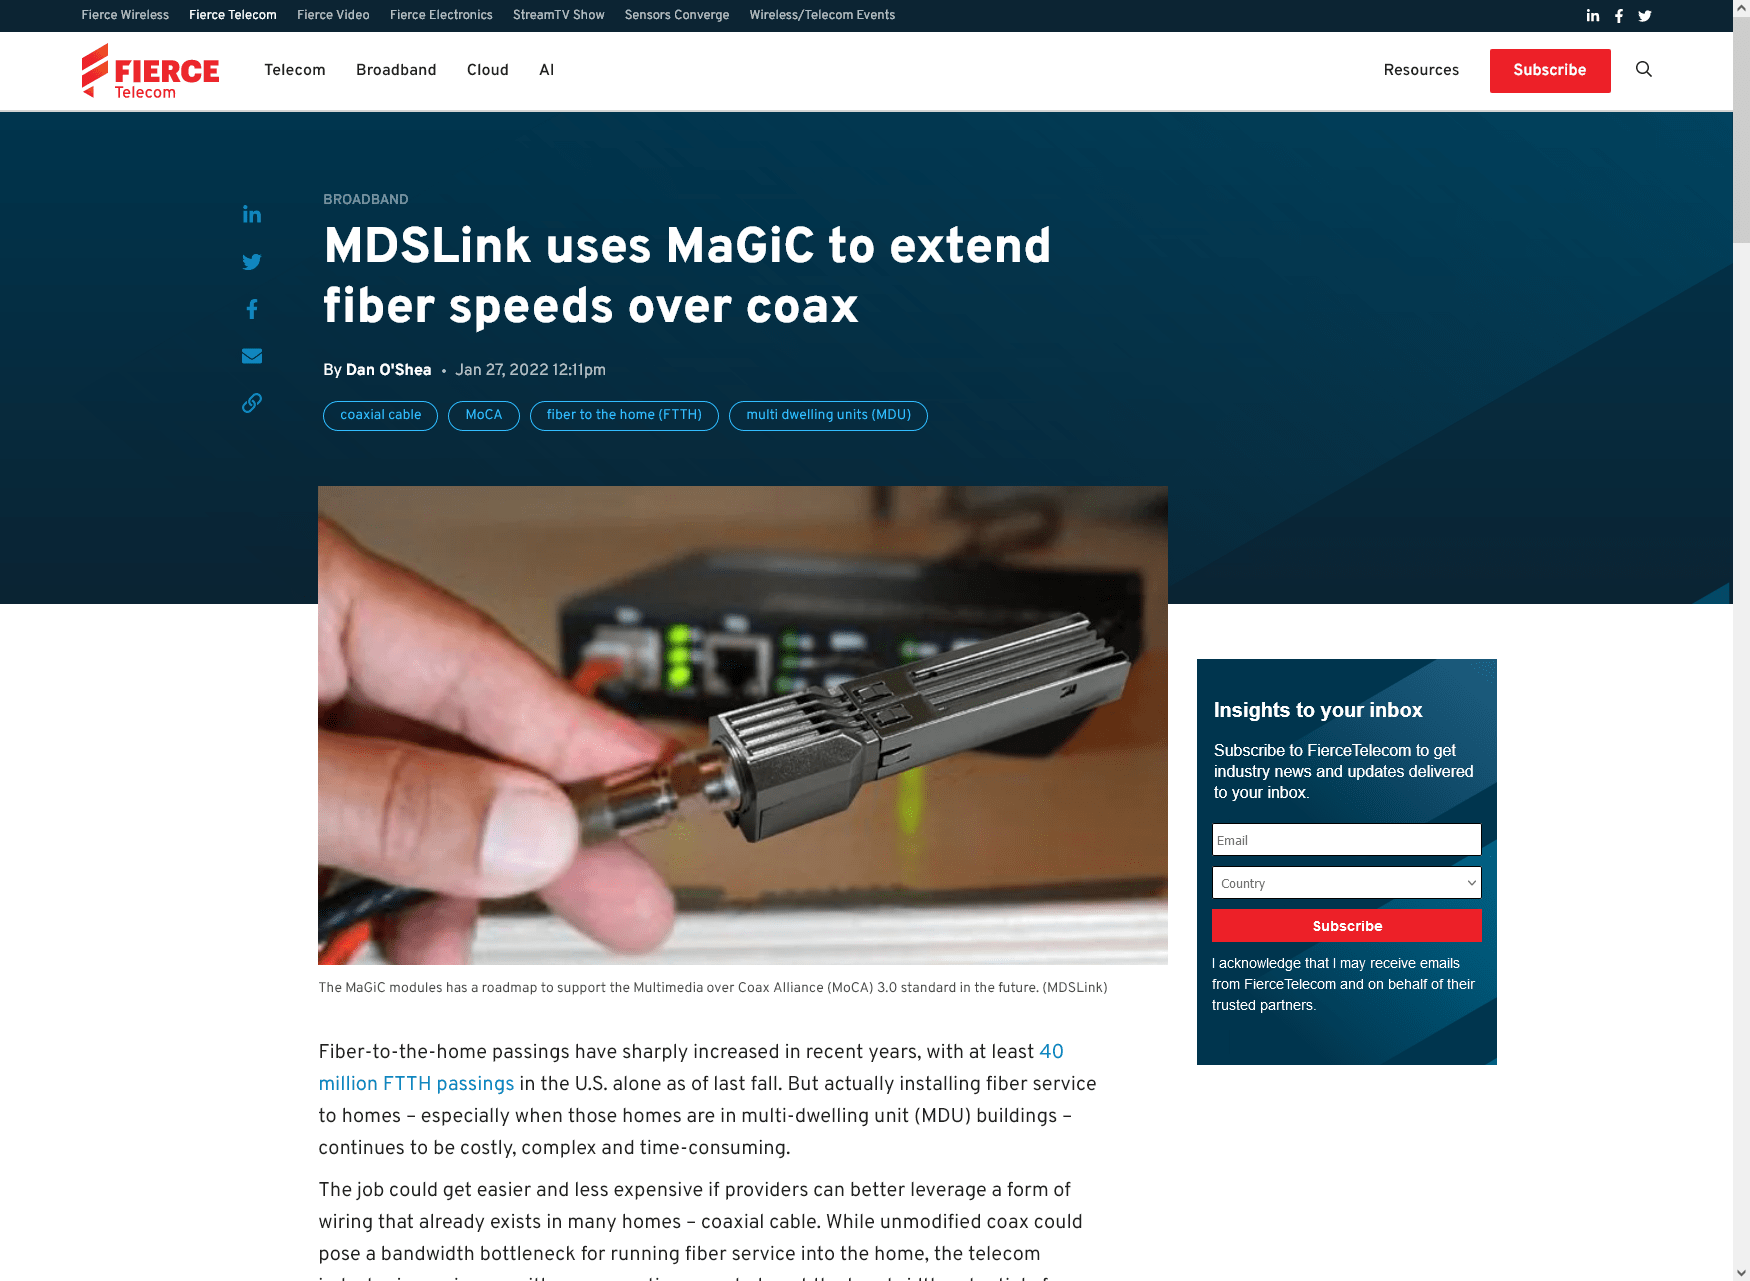 MDSLink uses MaGiC to extend fiber speeds over coax